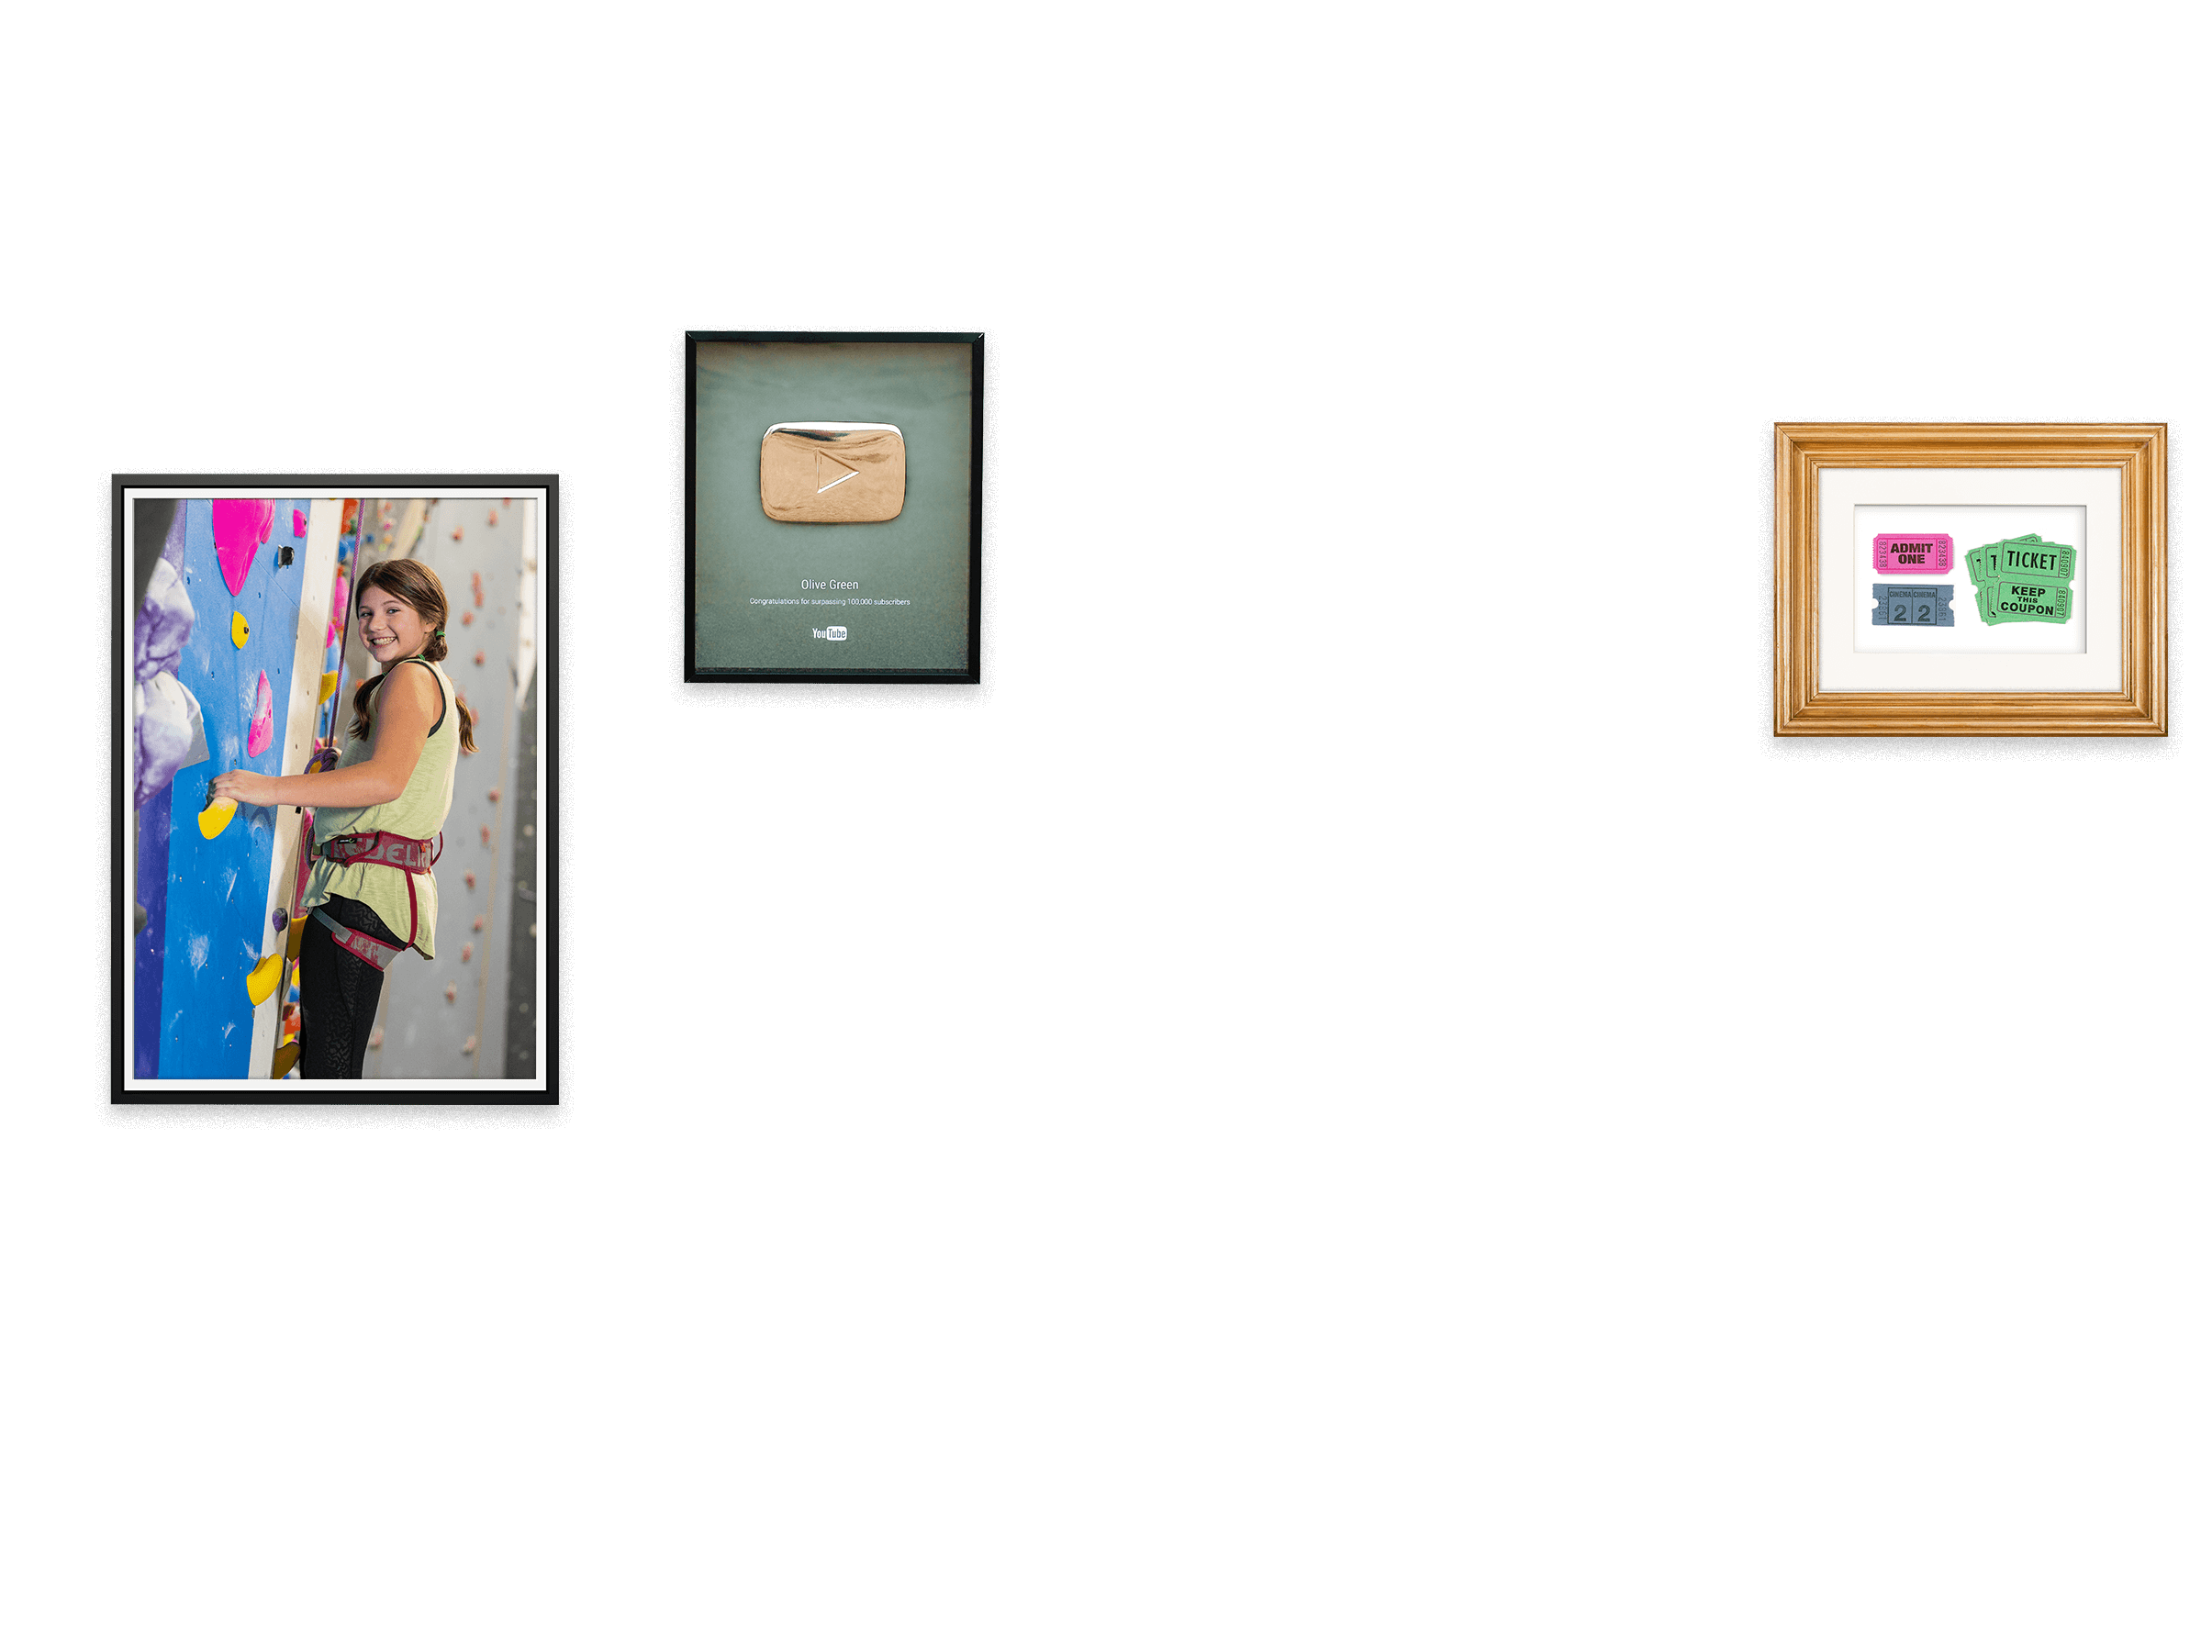 Framed photos of the girl climbing an indoor rock wall, a YouTube award, and framed ticket stubs